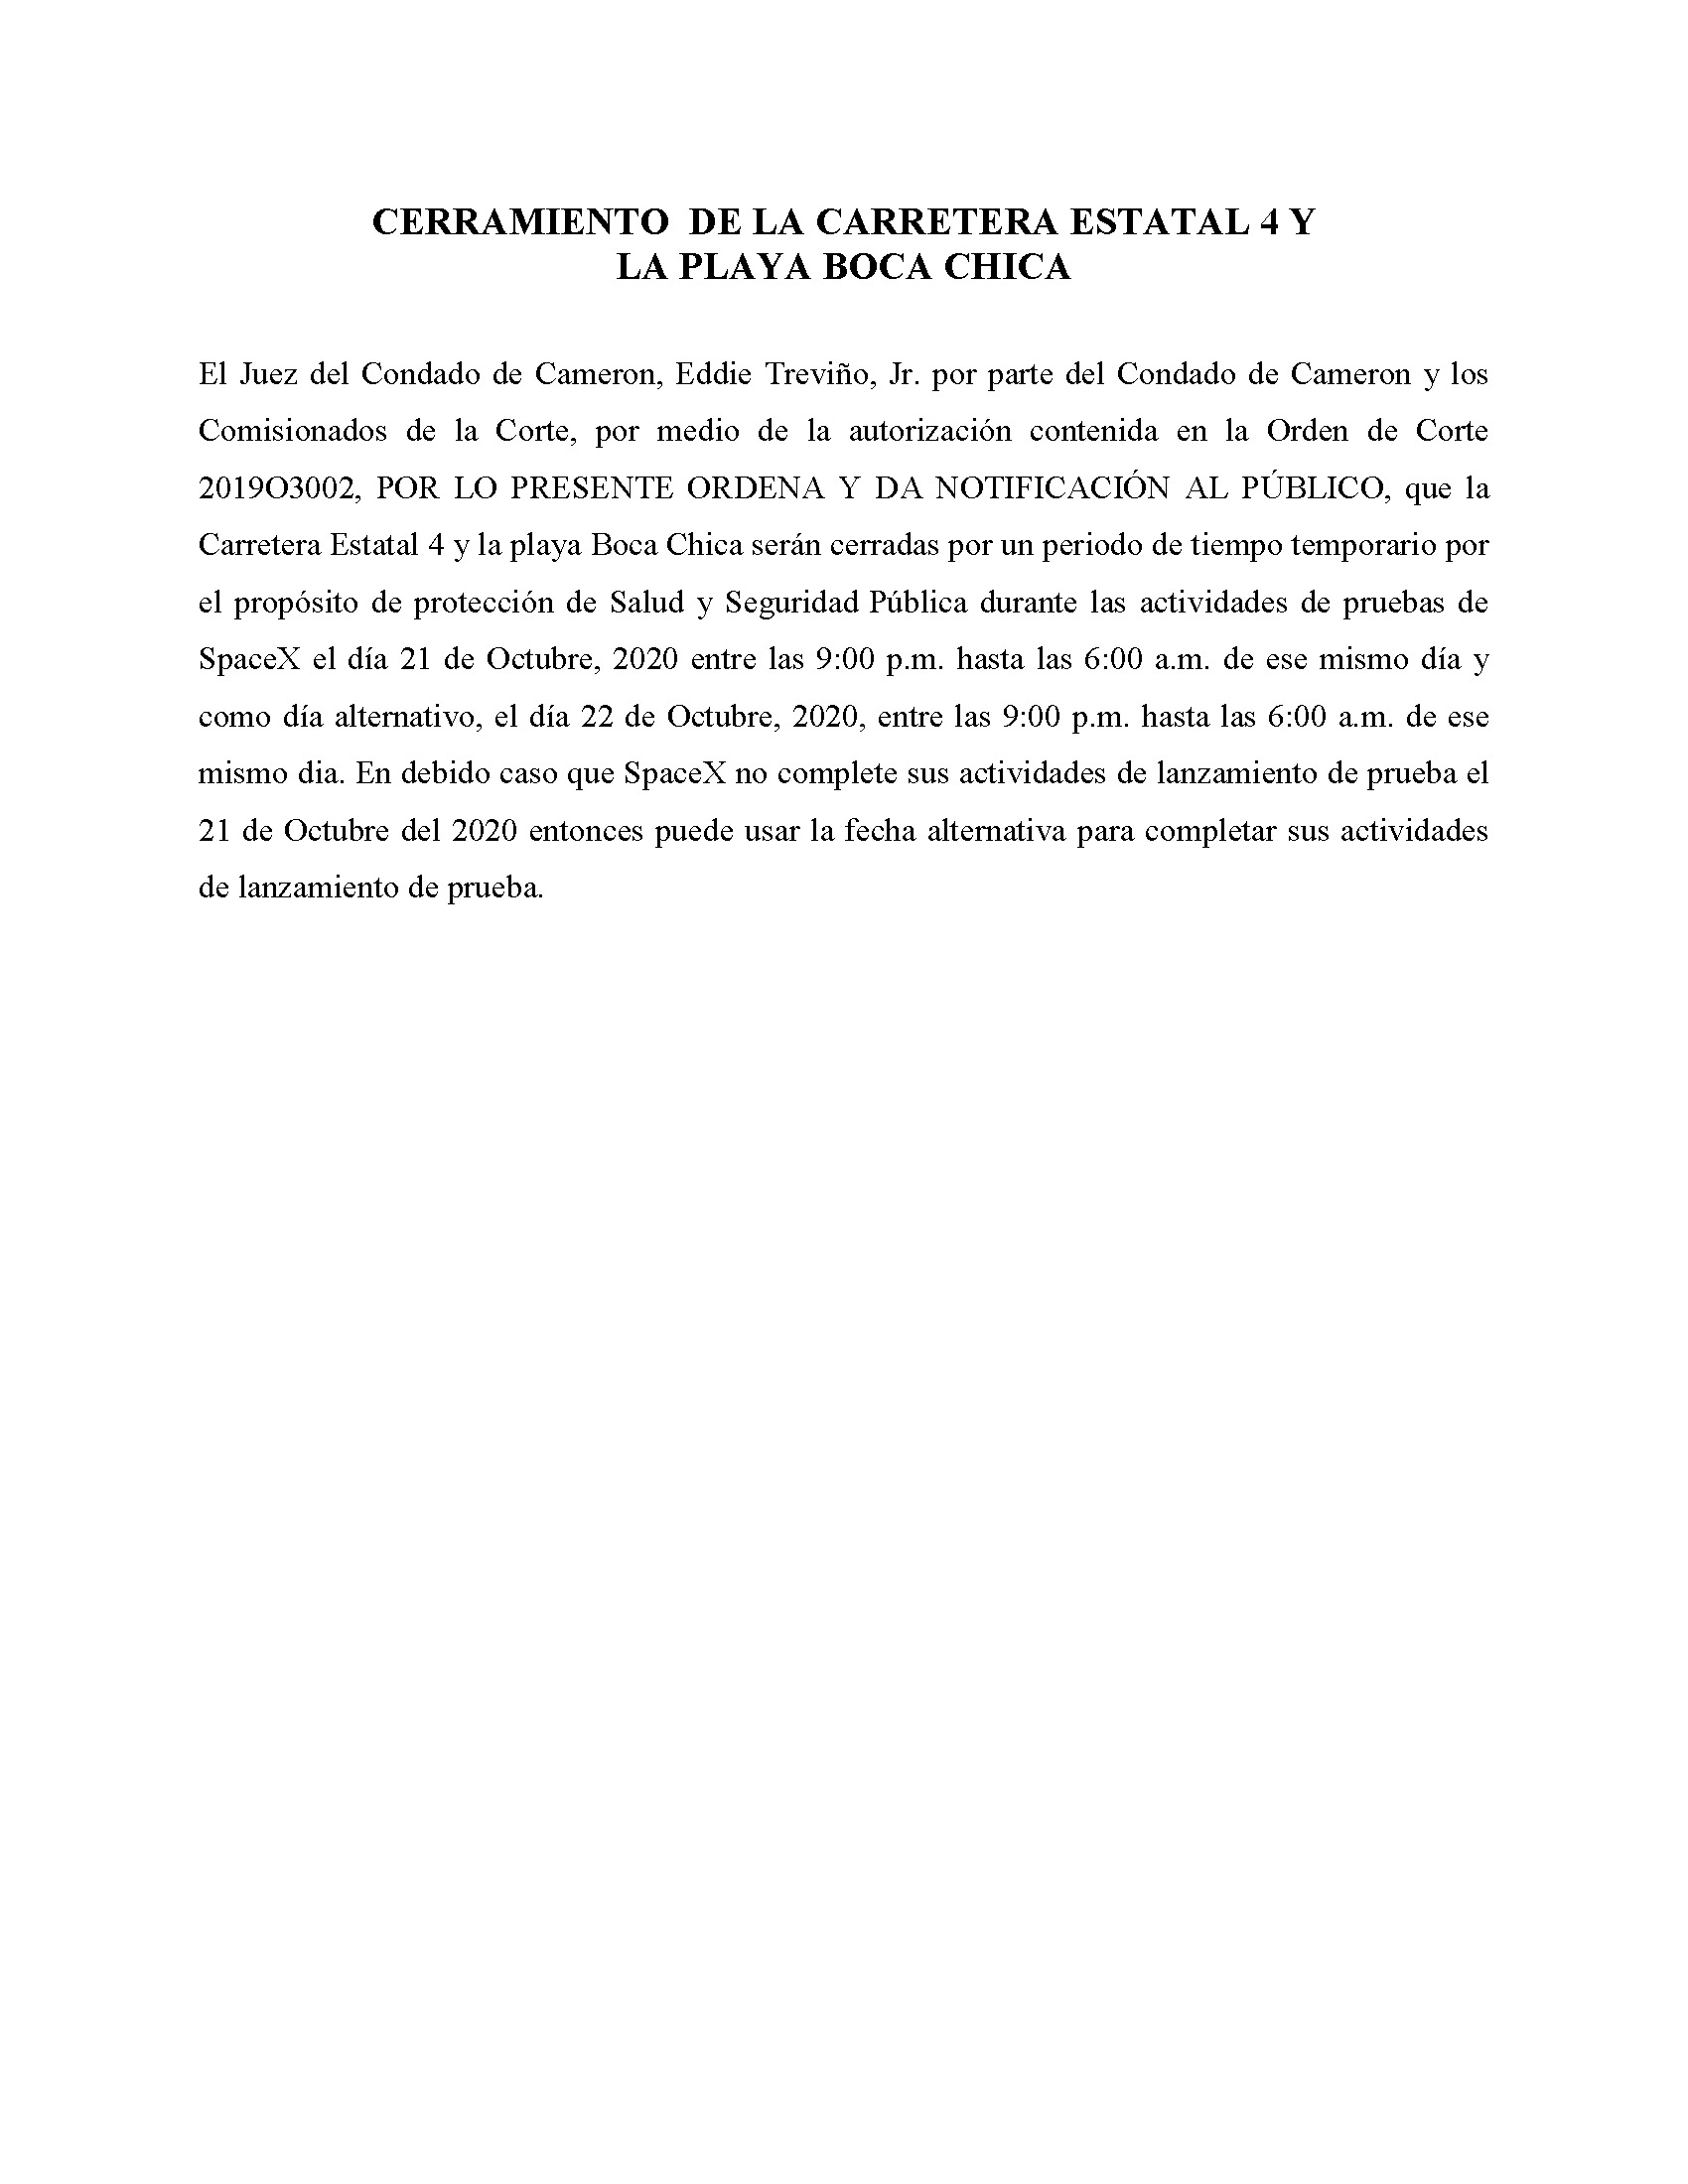 ORDER.CLOSURE OF HIGHWAY 4 Y LA PLAYA BOCA CHICA.SPANISH.10.21.20